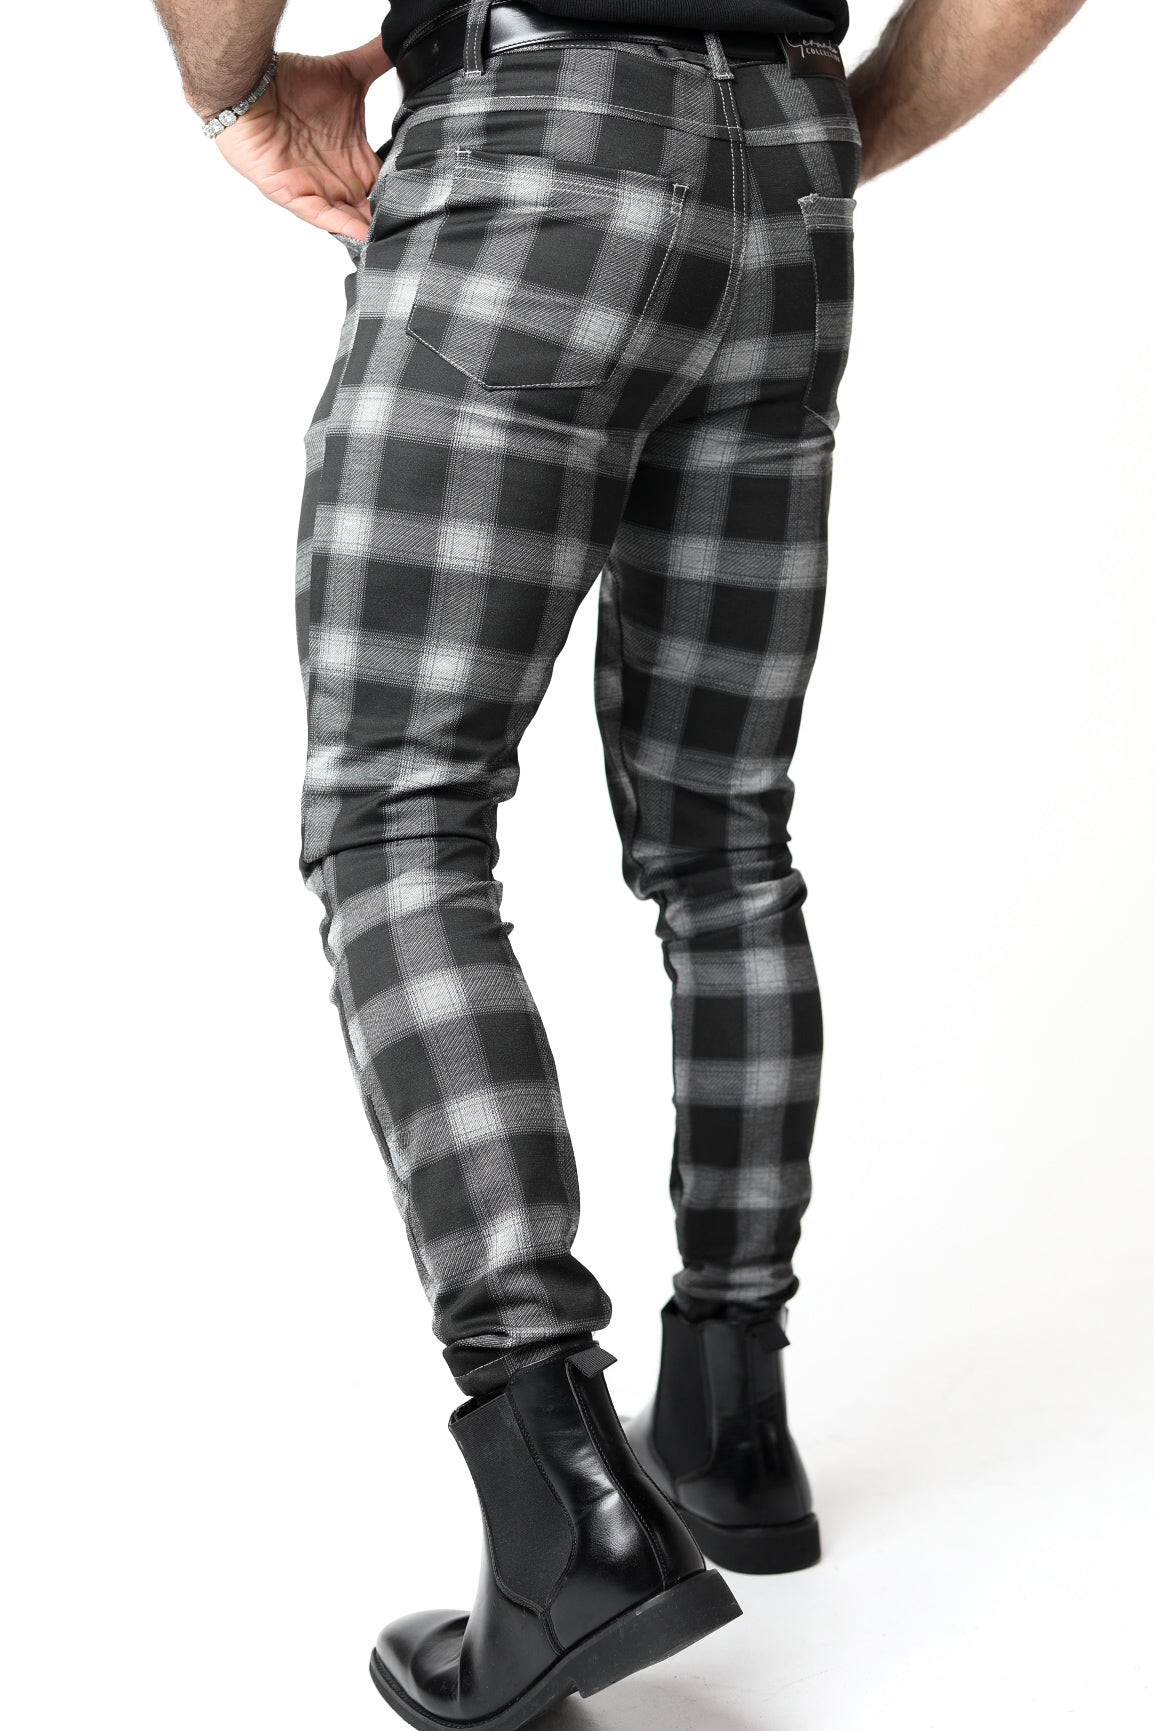 Black Plaid & Checkered Dress Pants